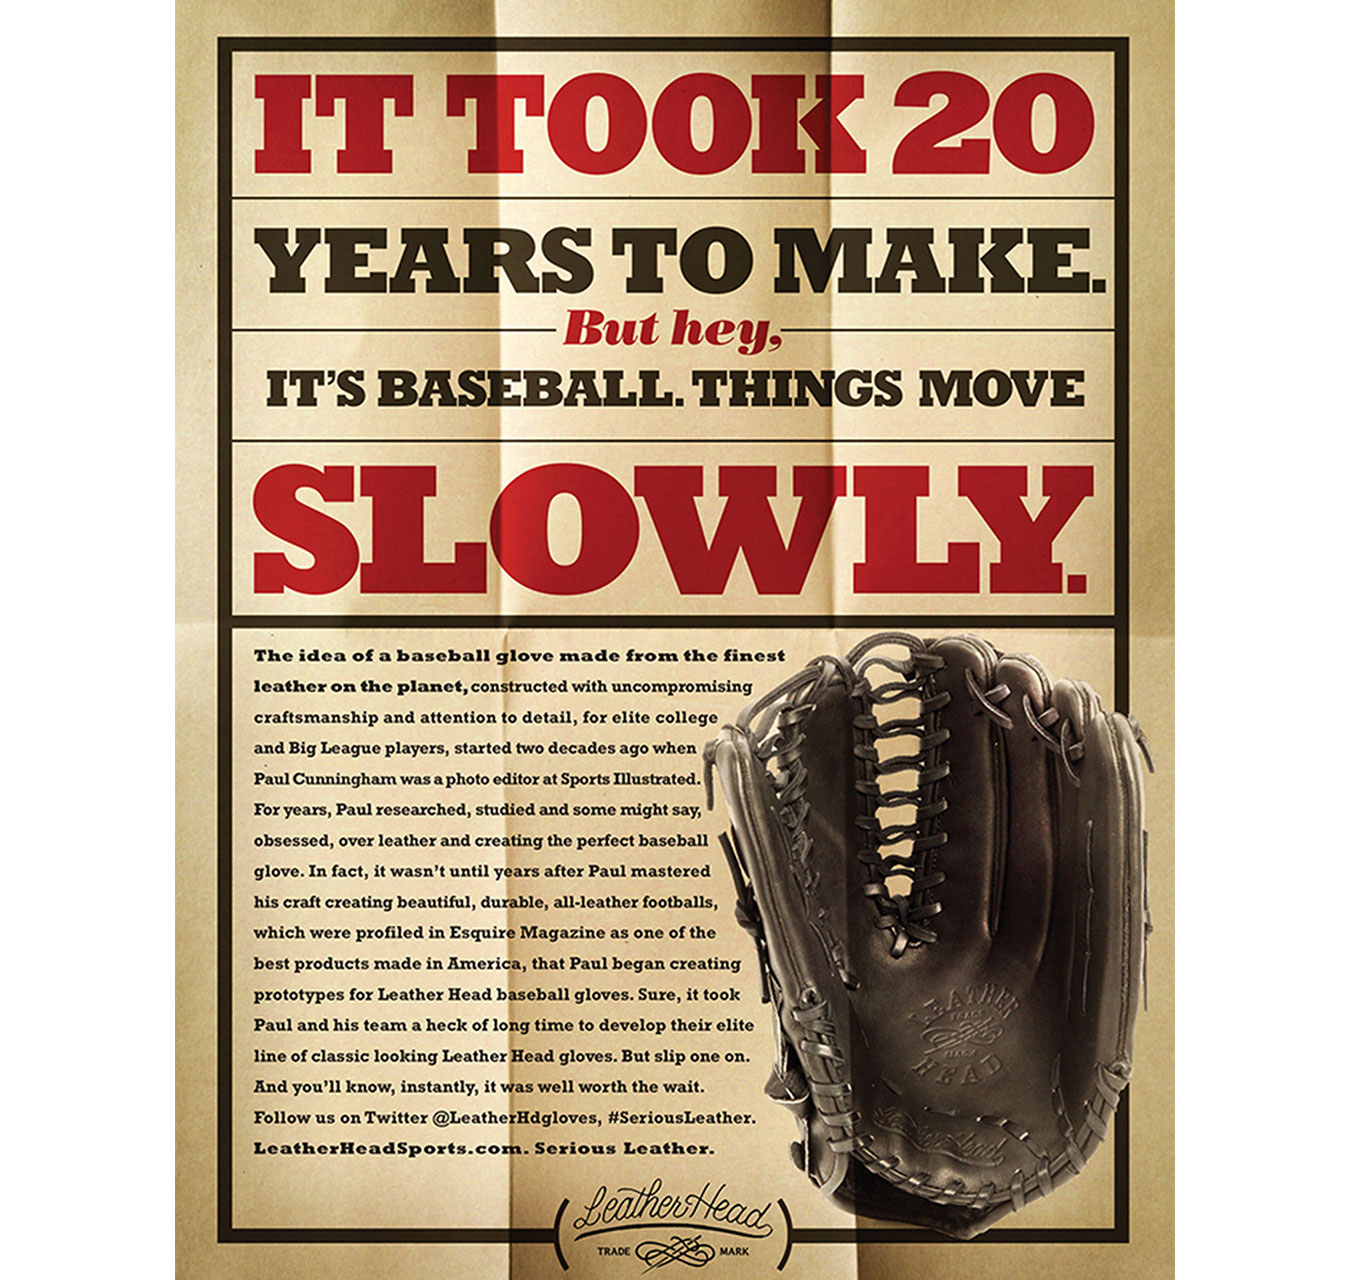 Advertisement for premium Leather Head baseball gloves